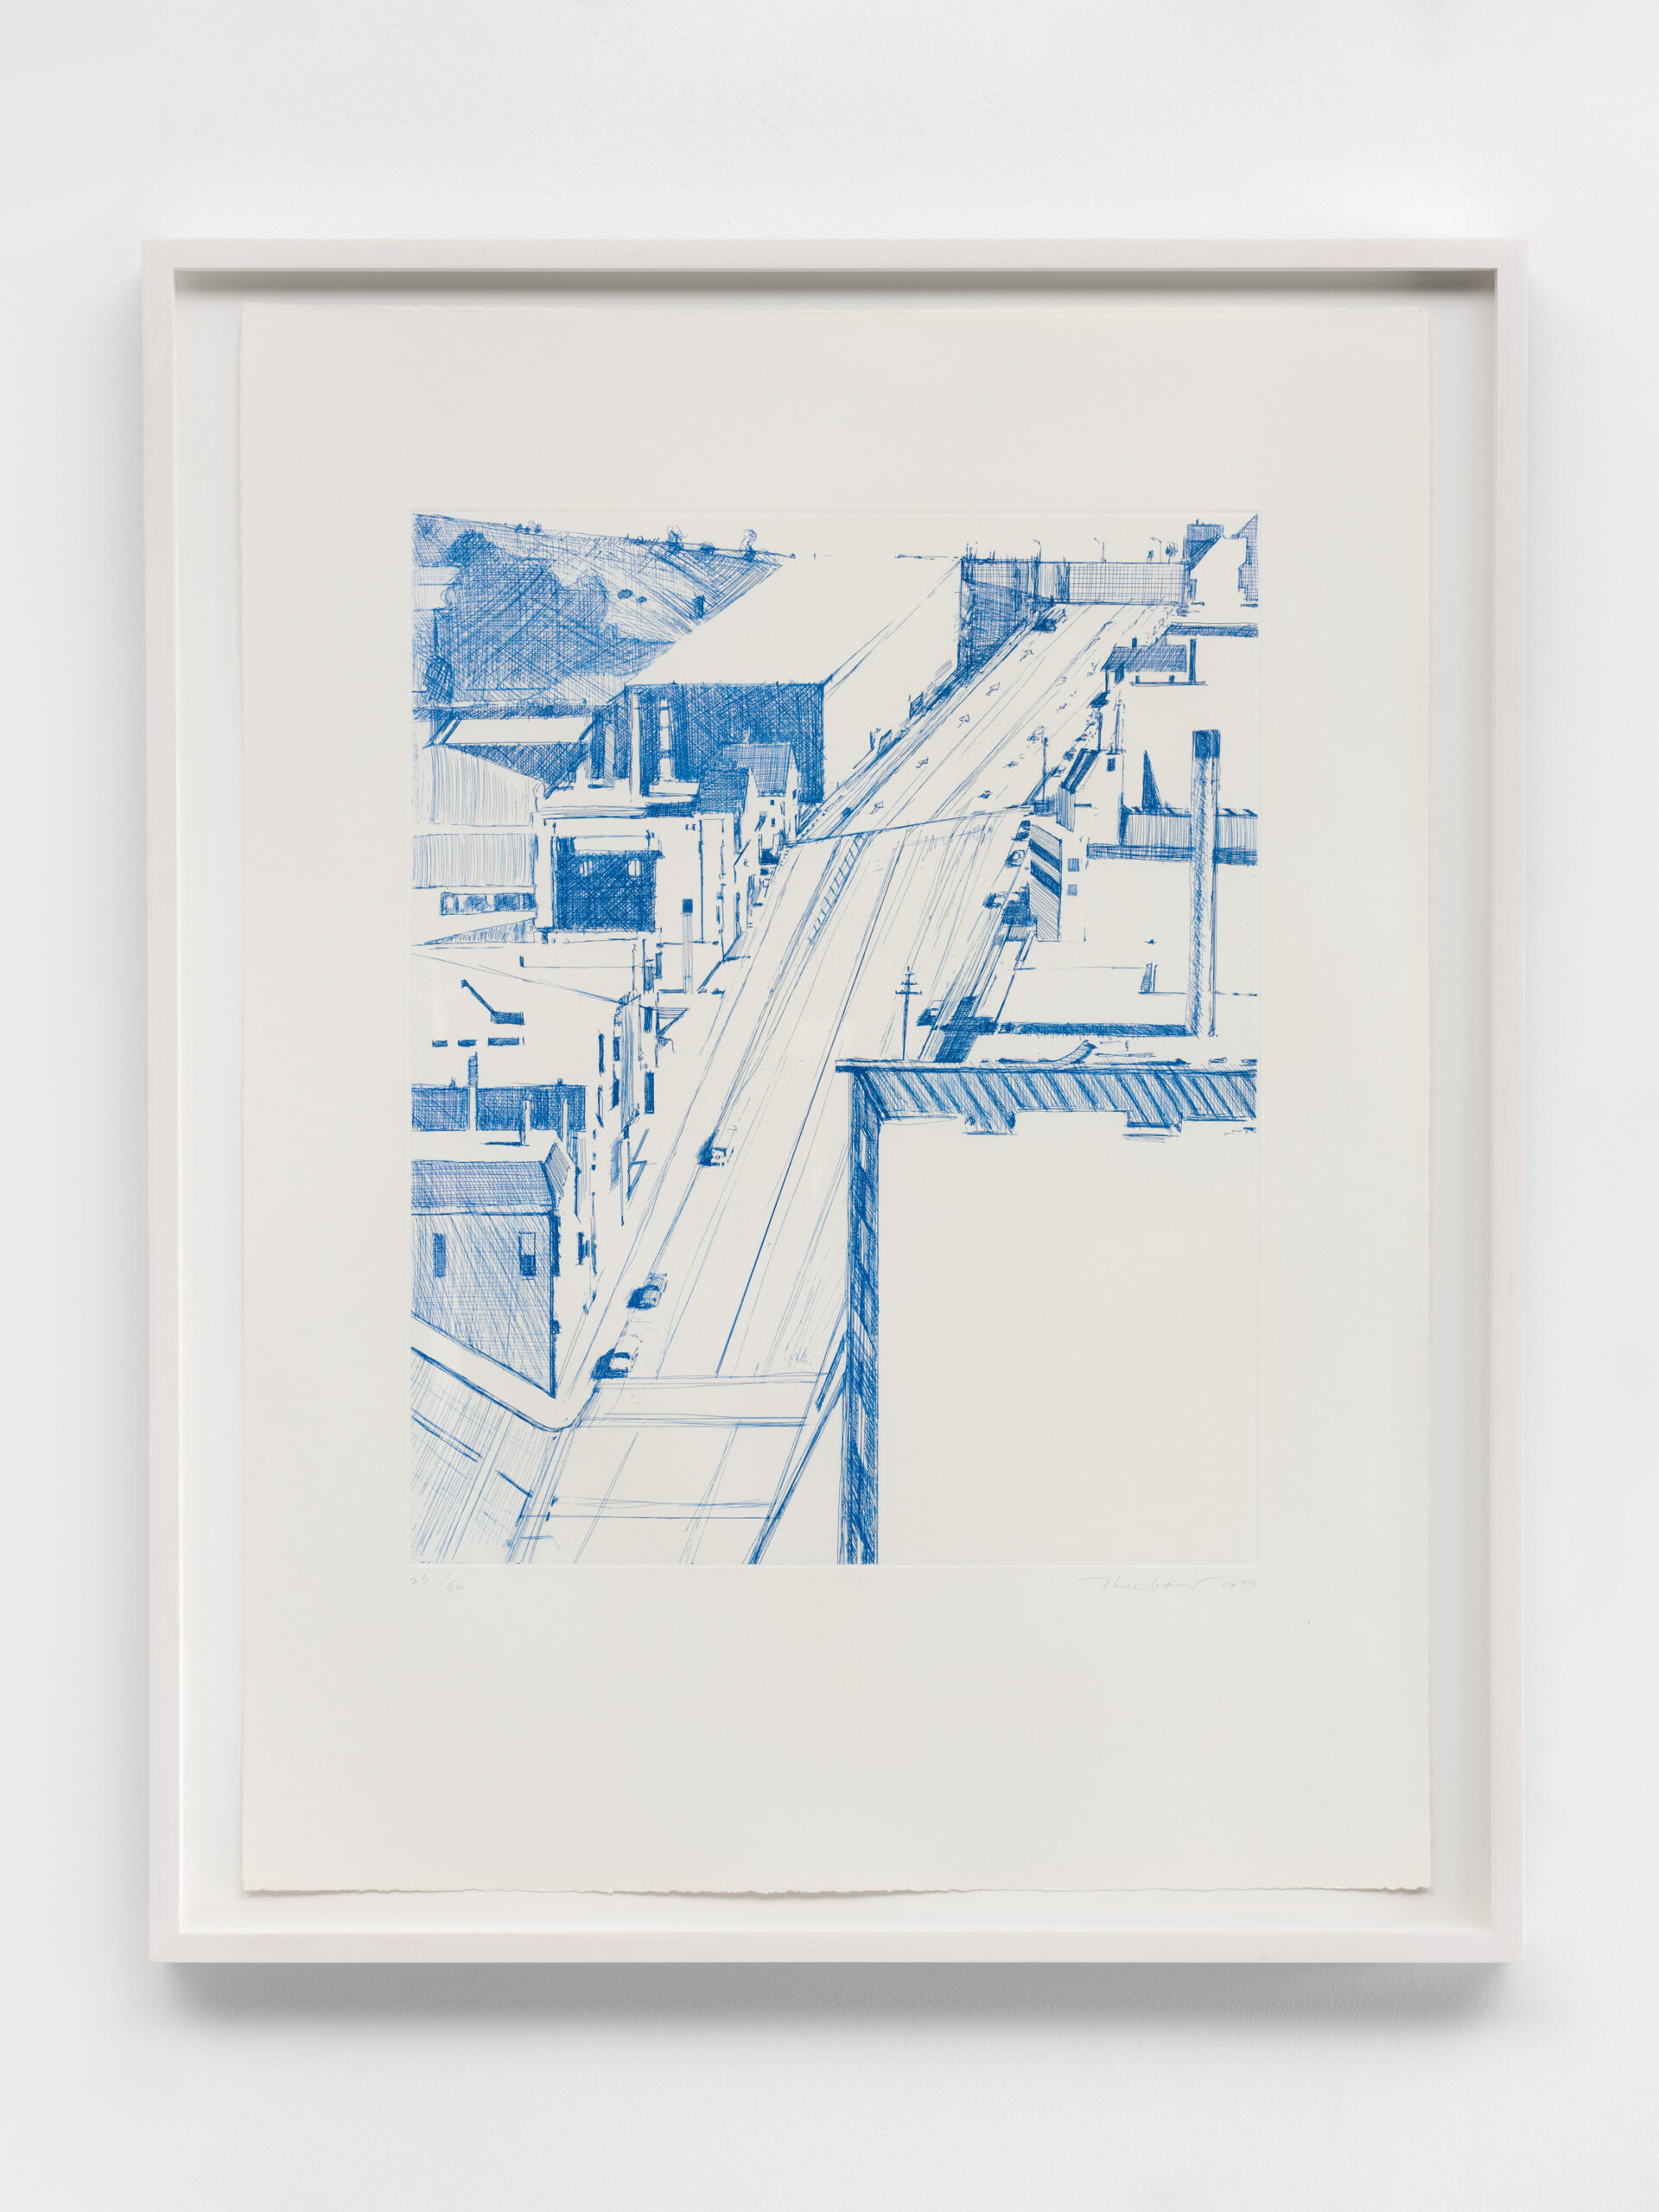 Wayne Thiebaud Down 18th, 1979 Etching Image Dimensions: 29 7/8 x 22 3/8 inches (75.9 x 56.8 cm) Framed Dimensions: 32 3/8 x 25 5/8 inches (82.2 x 65.1 cm) Edition of 50